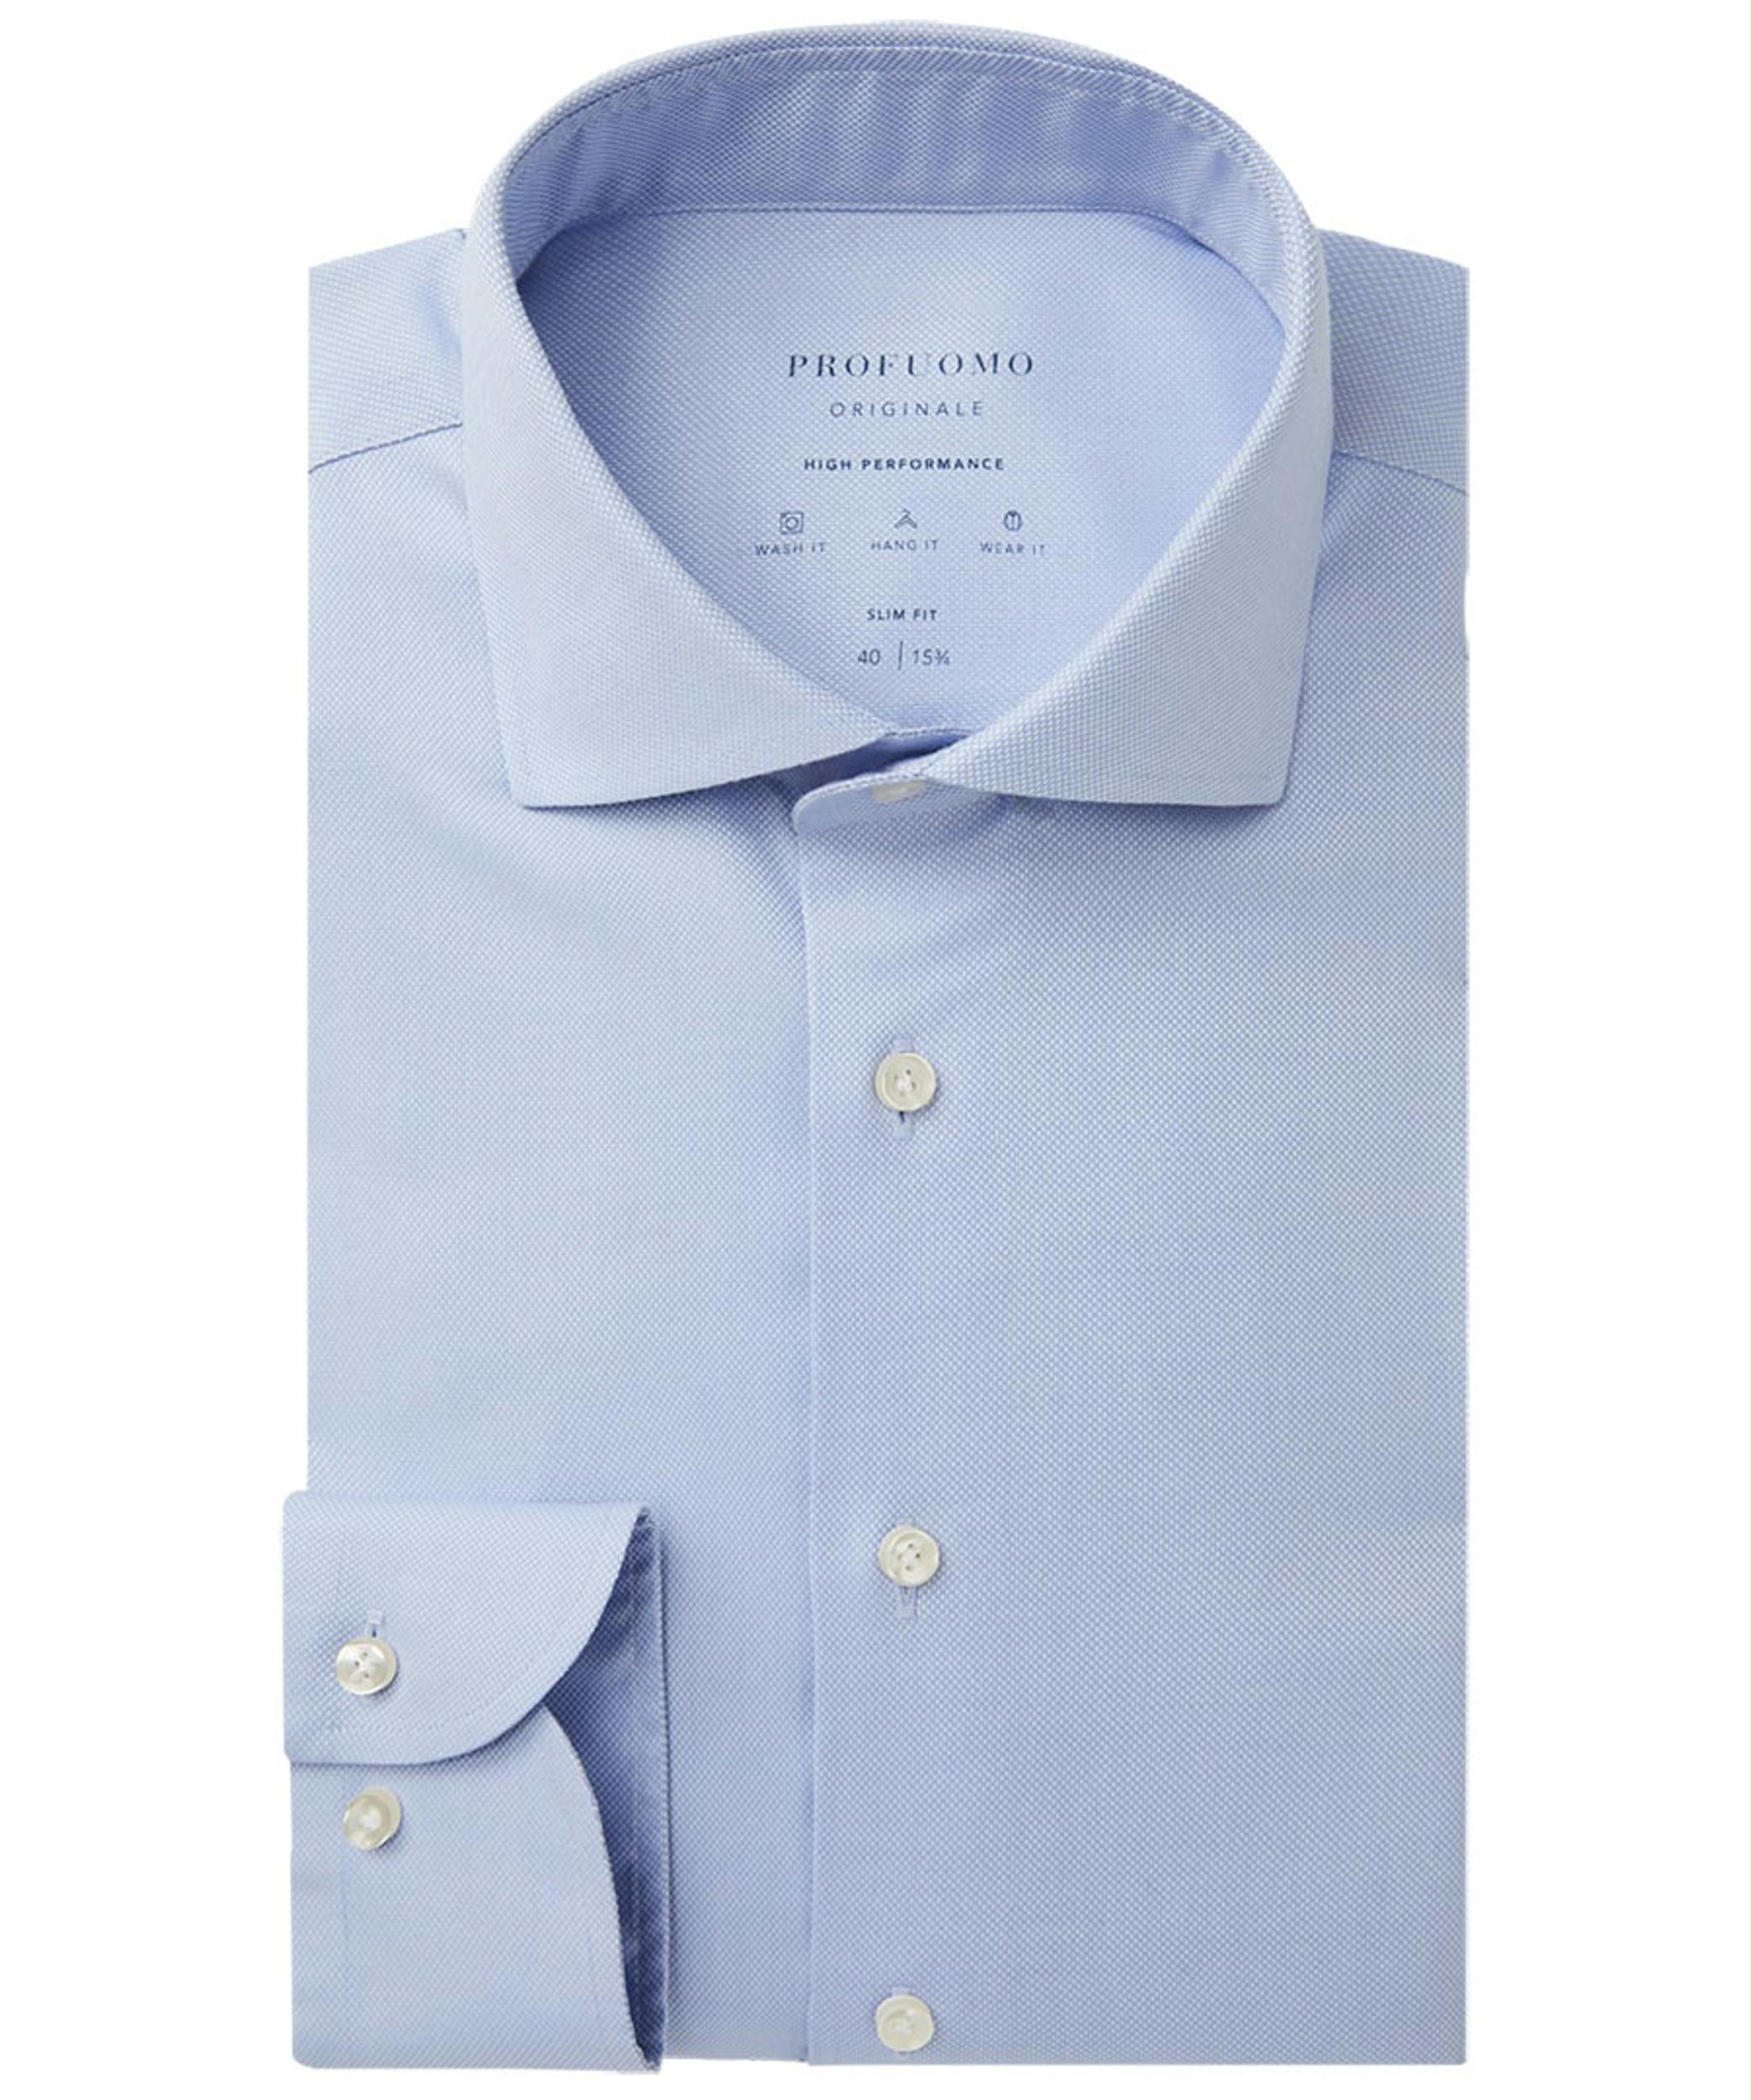 Profuomo Business hemd lange mouw Blauw High performance shirt PP0H0A0062/M